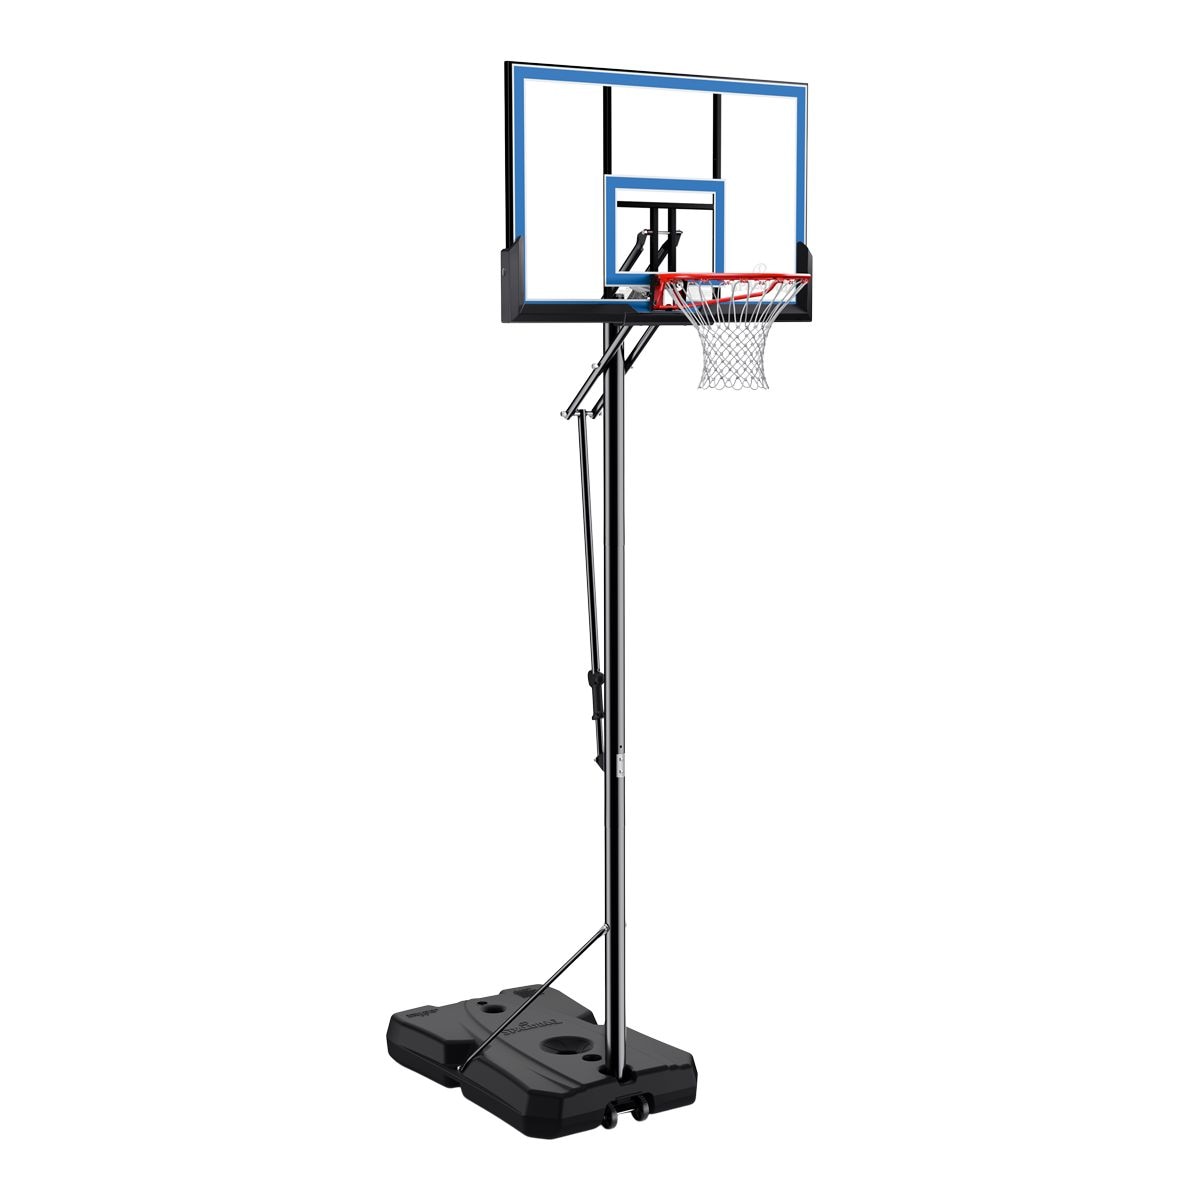 SKLZ Pro Mini Basketball Hoop System